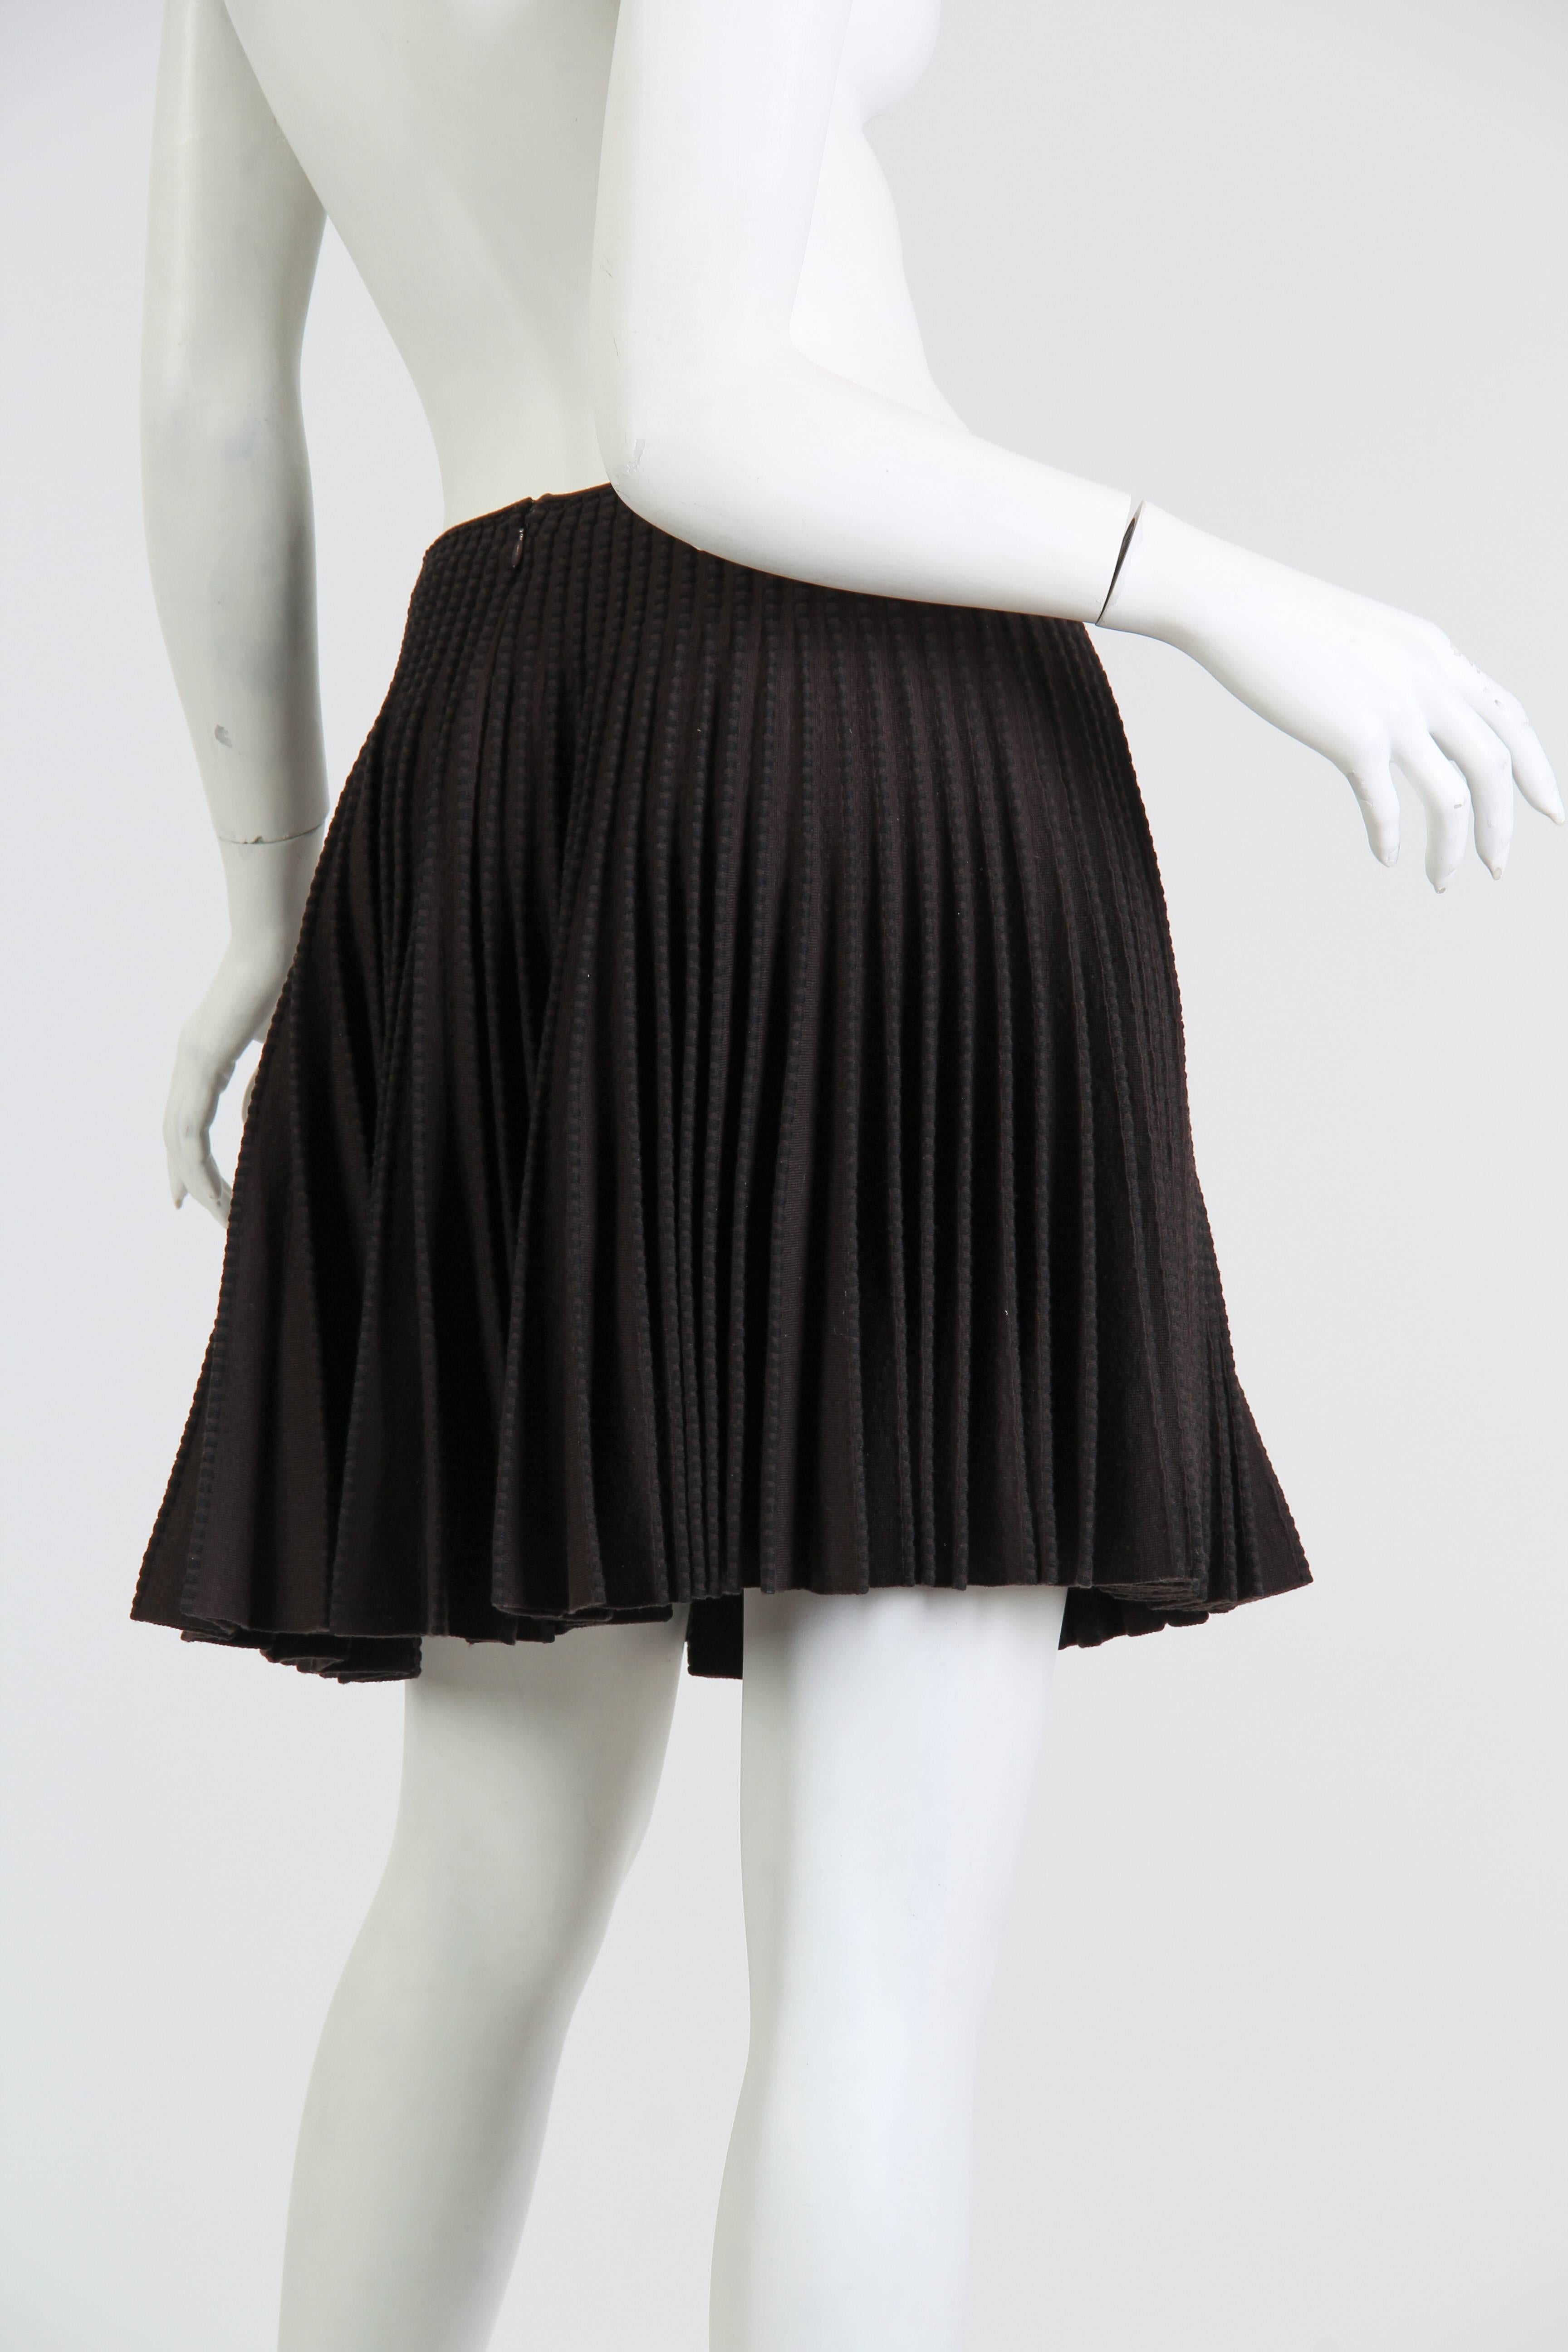 Women's 1990S AZZEDINE ALAIA Chocolate Brown & Black Rayon Blend Knit Ra-Ra Skirt For Sale